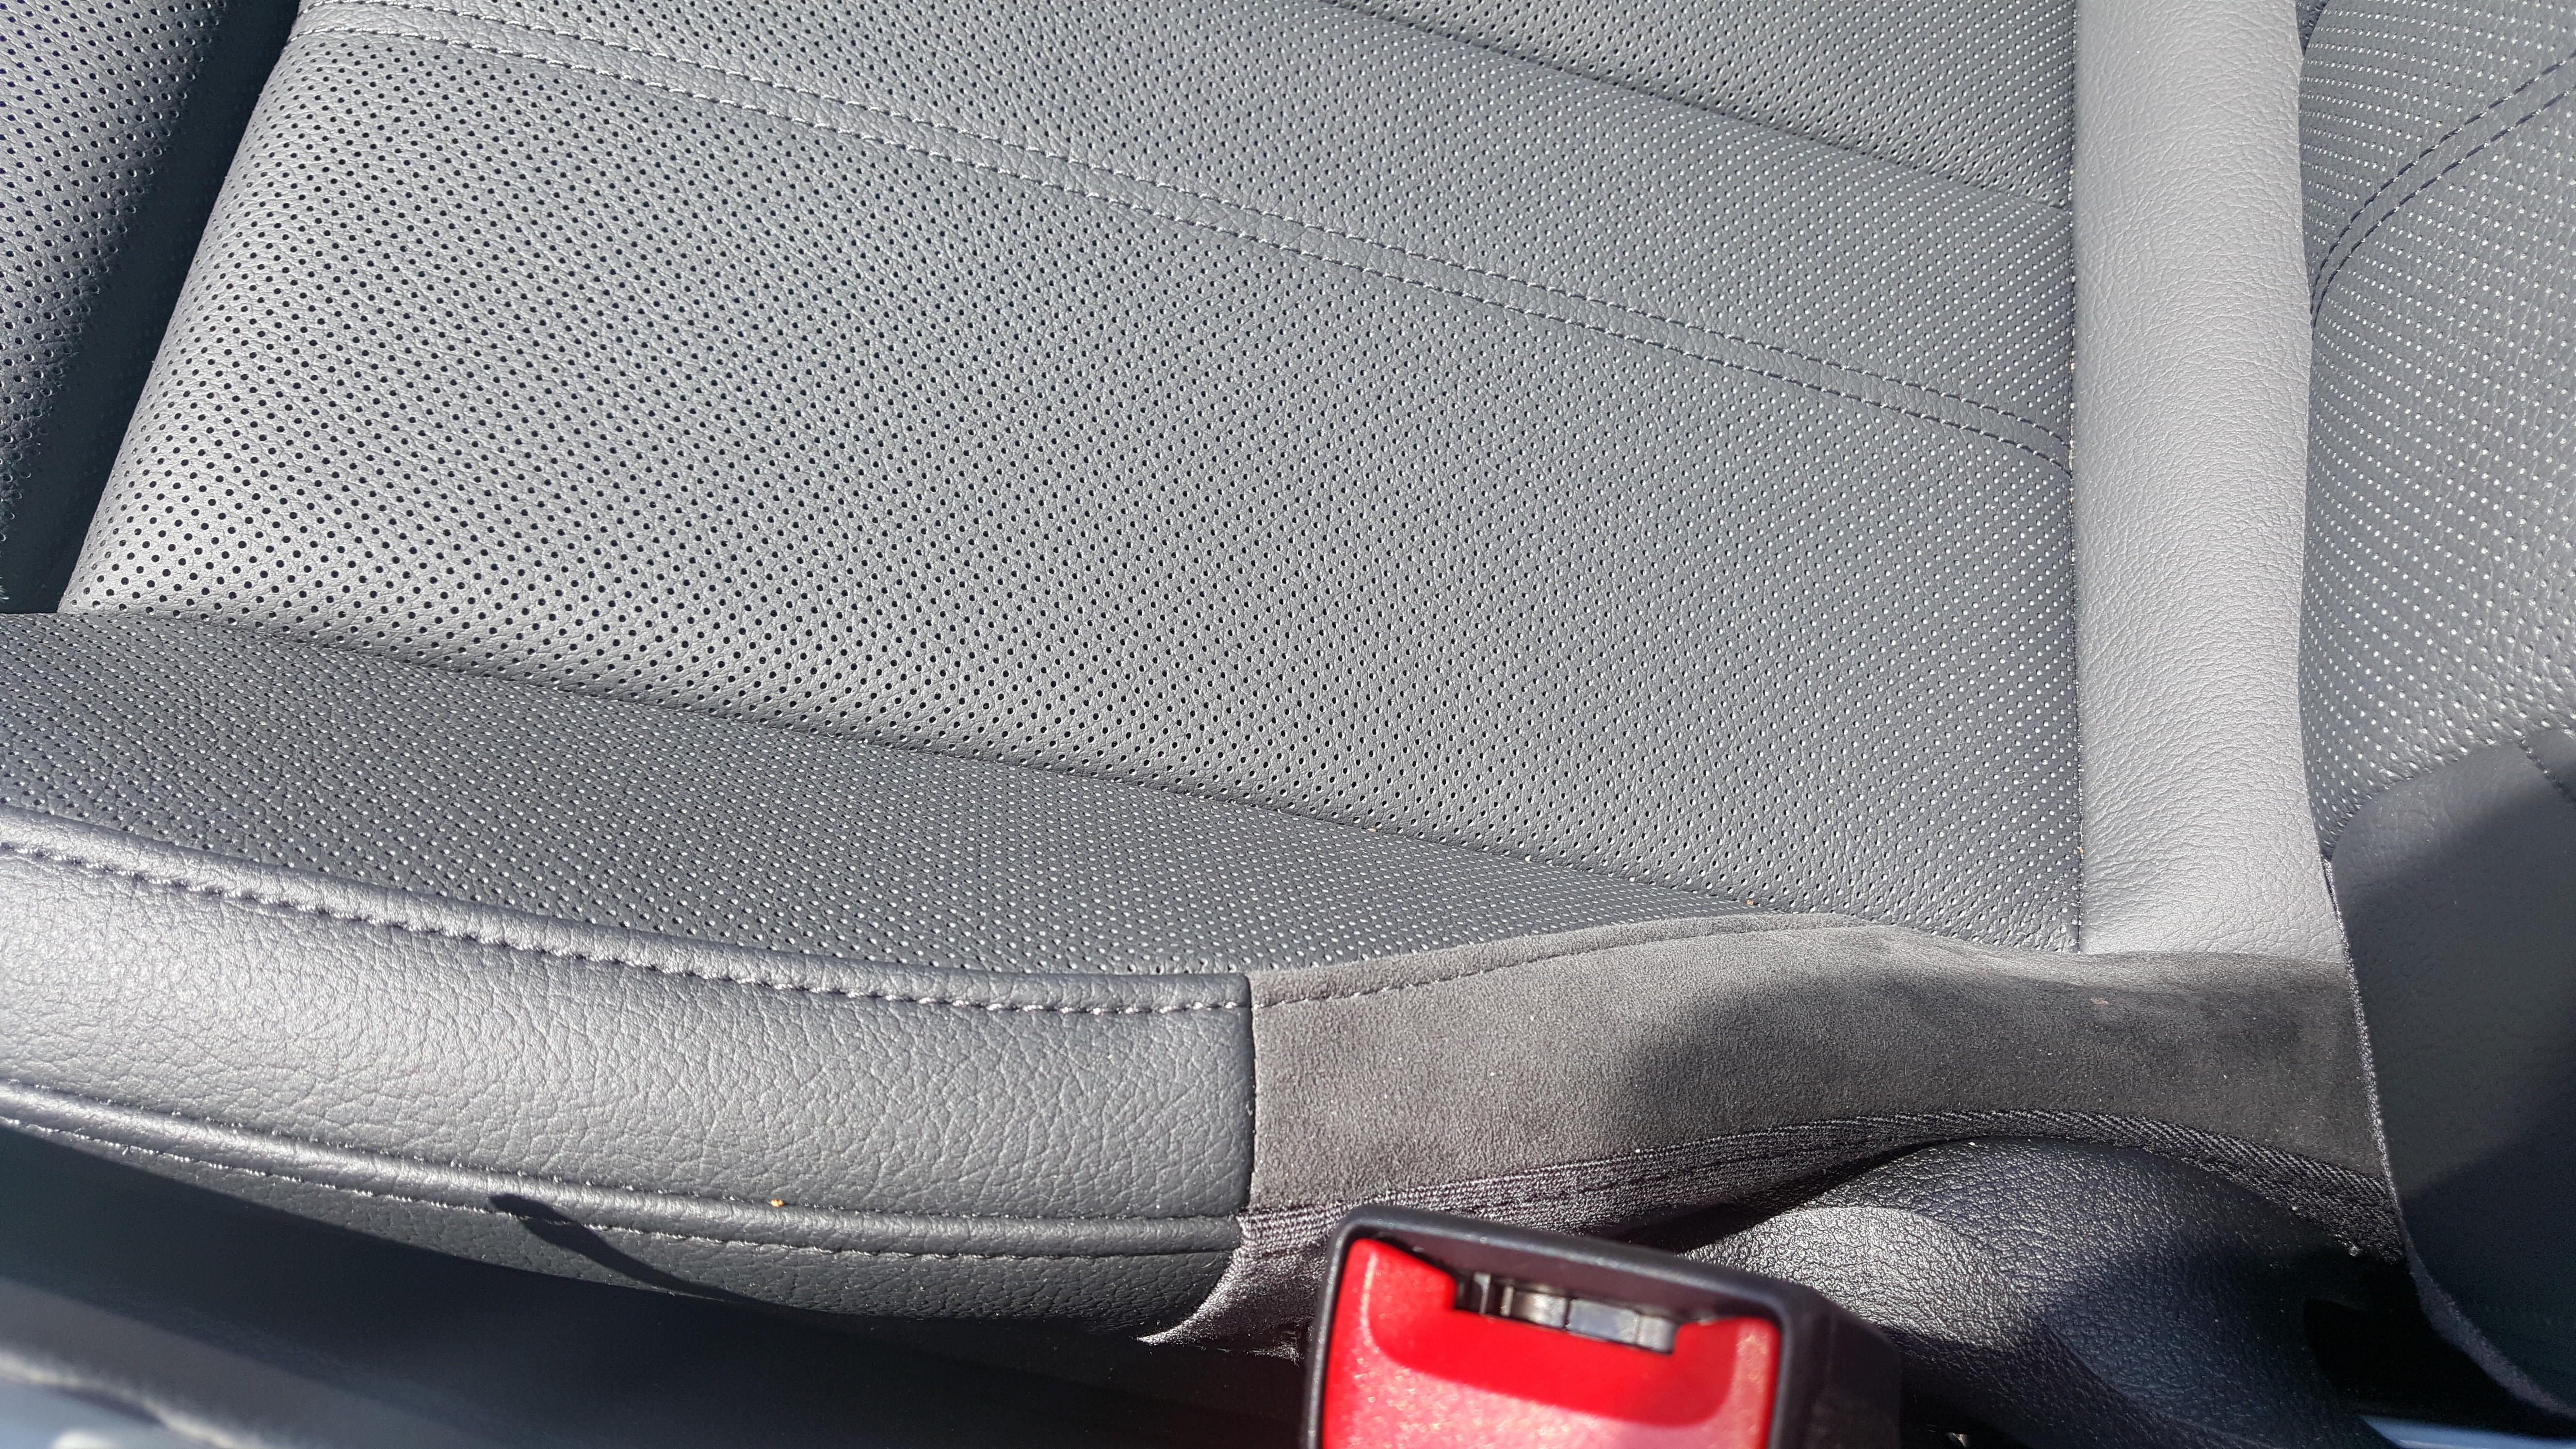 Alcantara inserts on the leather seats - AudiWorld Forums